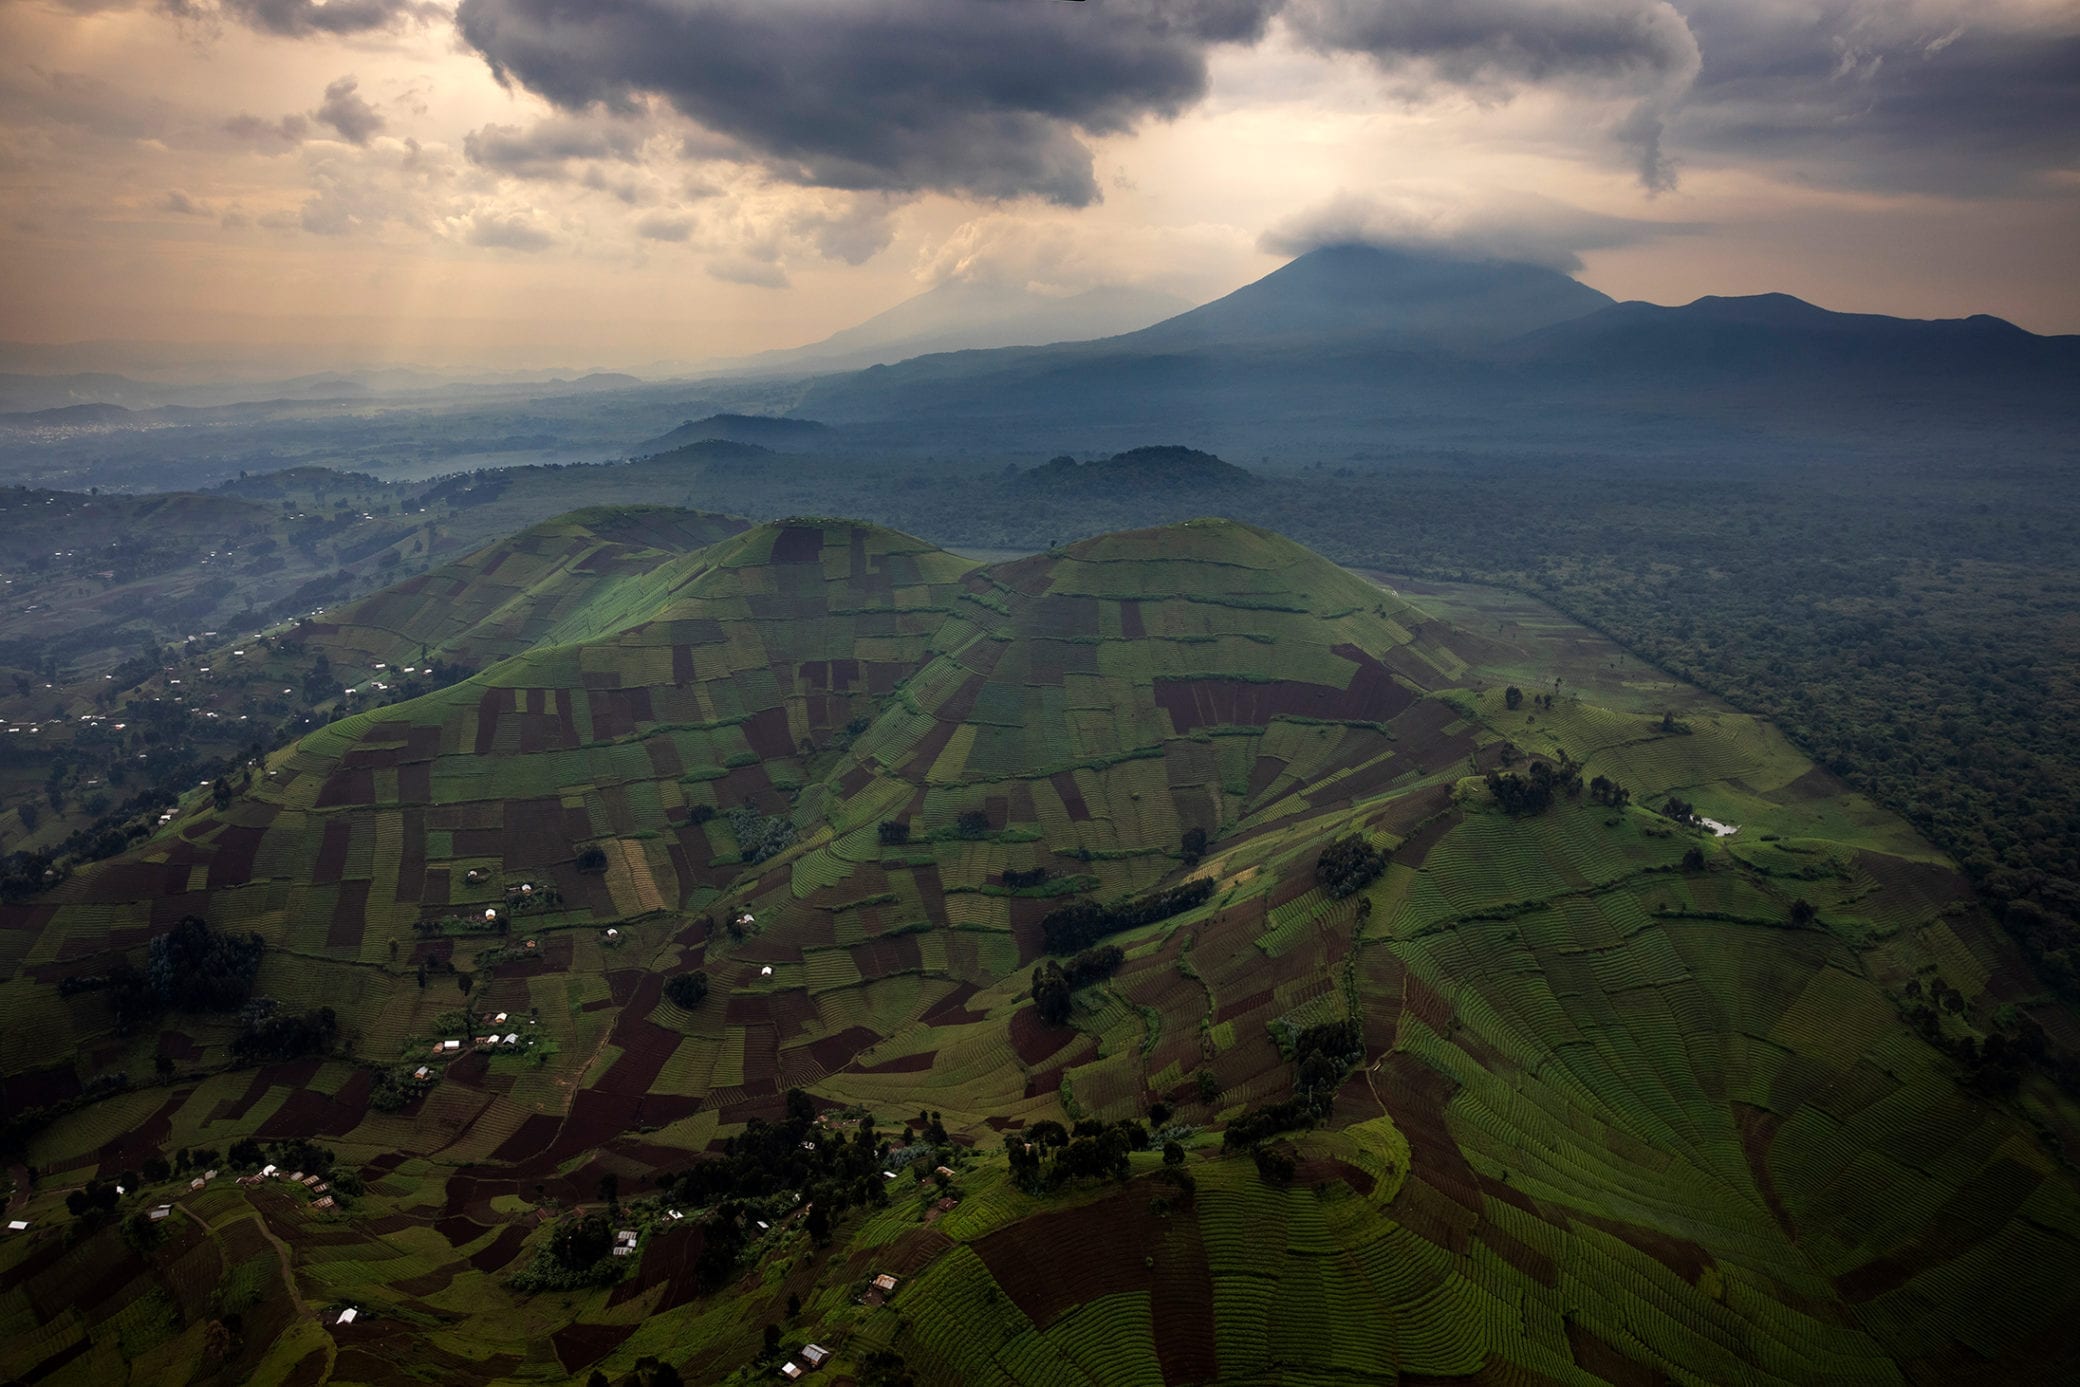 Farming landscape taken by photographer Brent Stirton